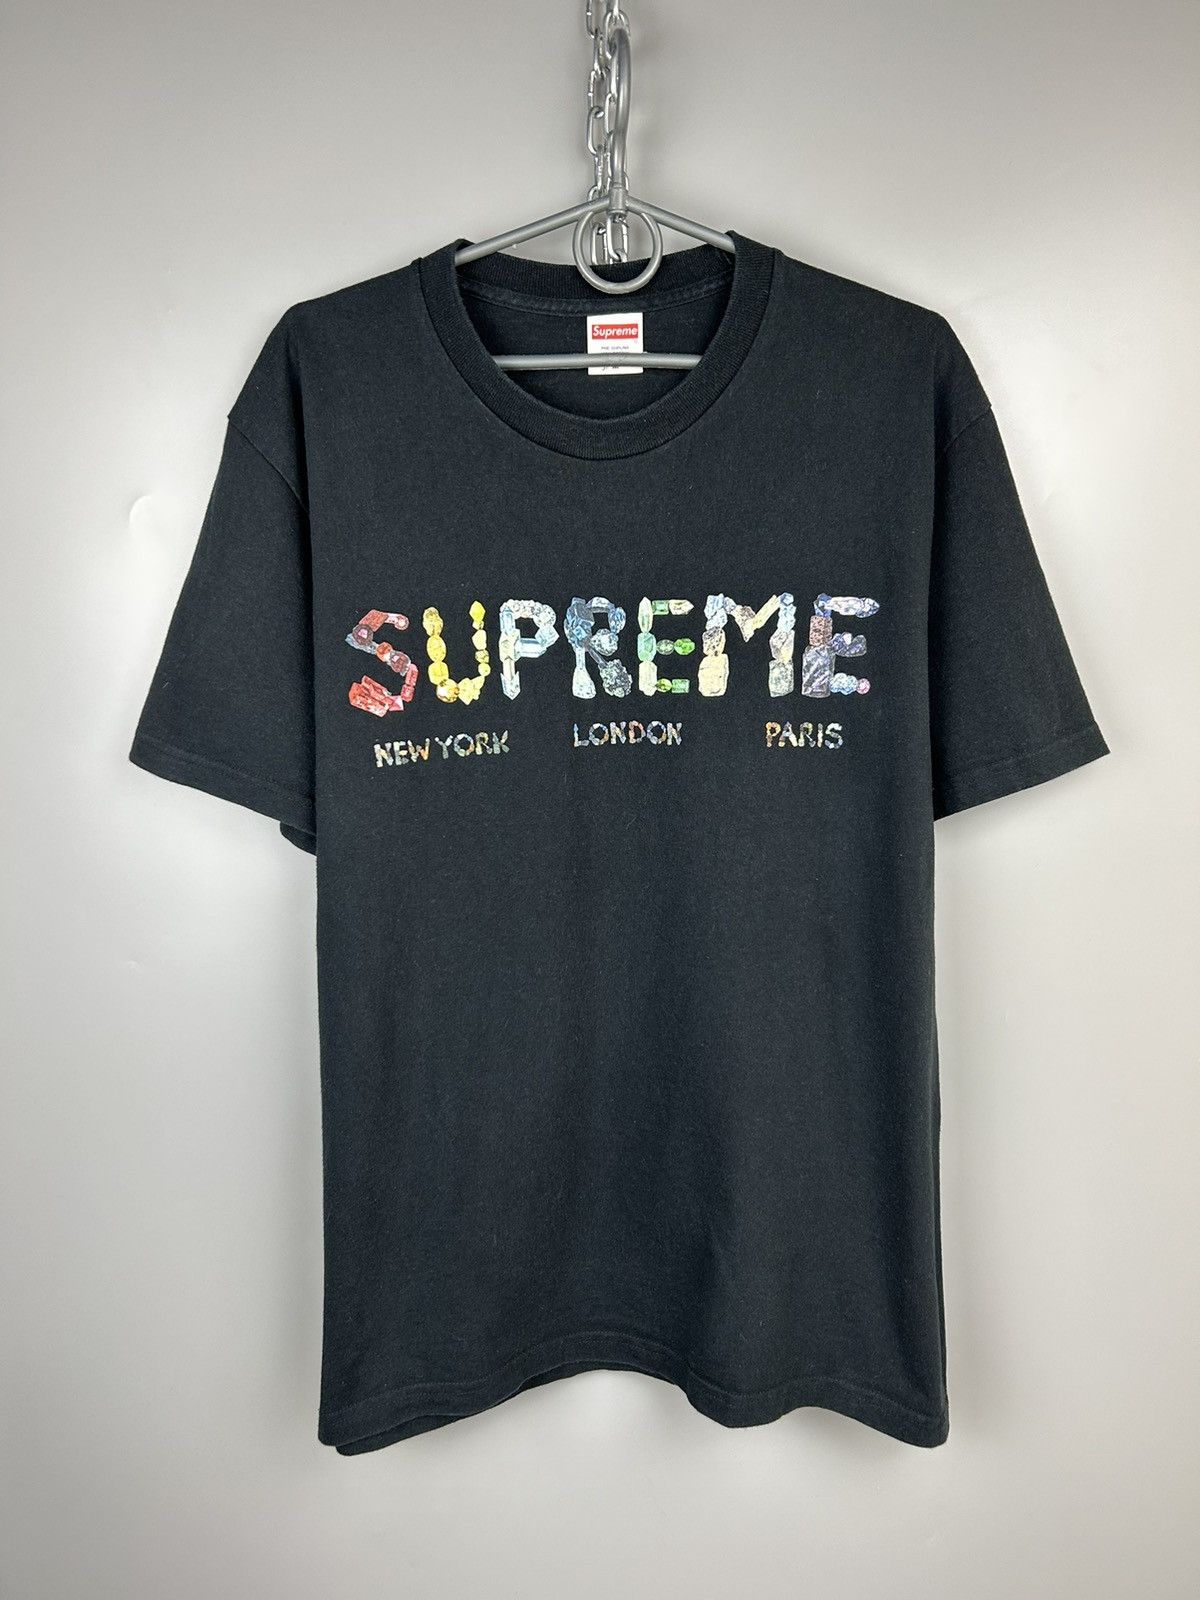 Supreme Supreme Rocks Tee New York London Paris T shirt | Grailed